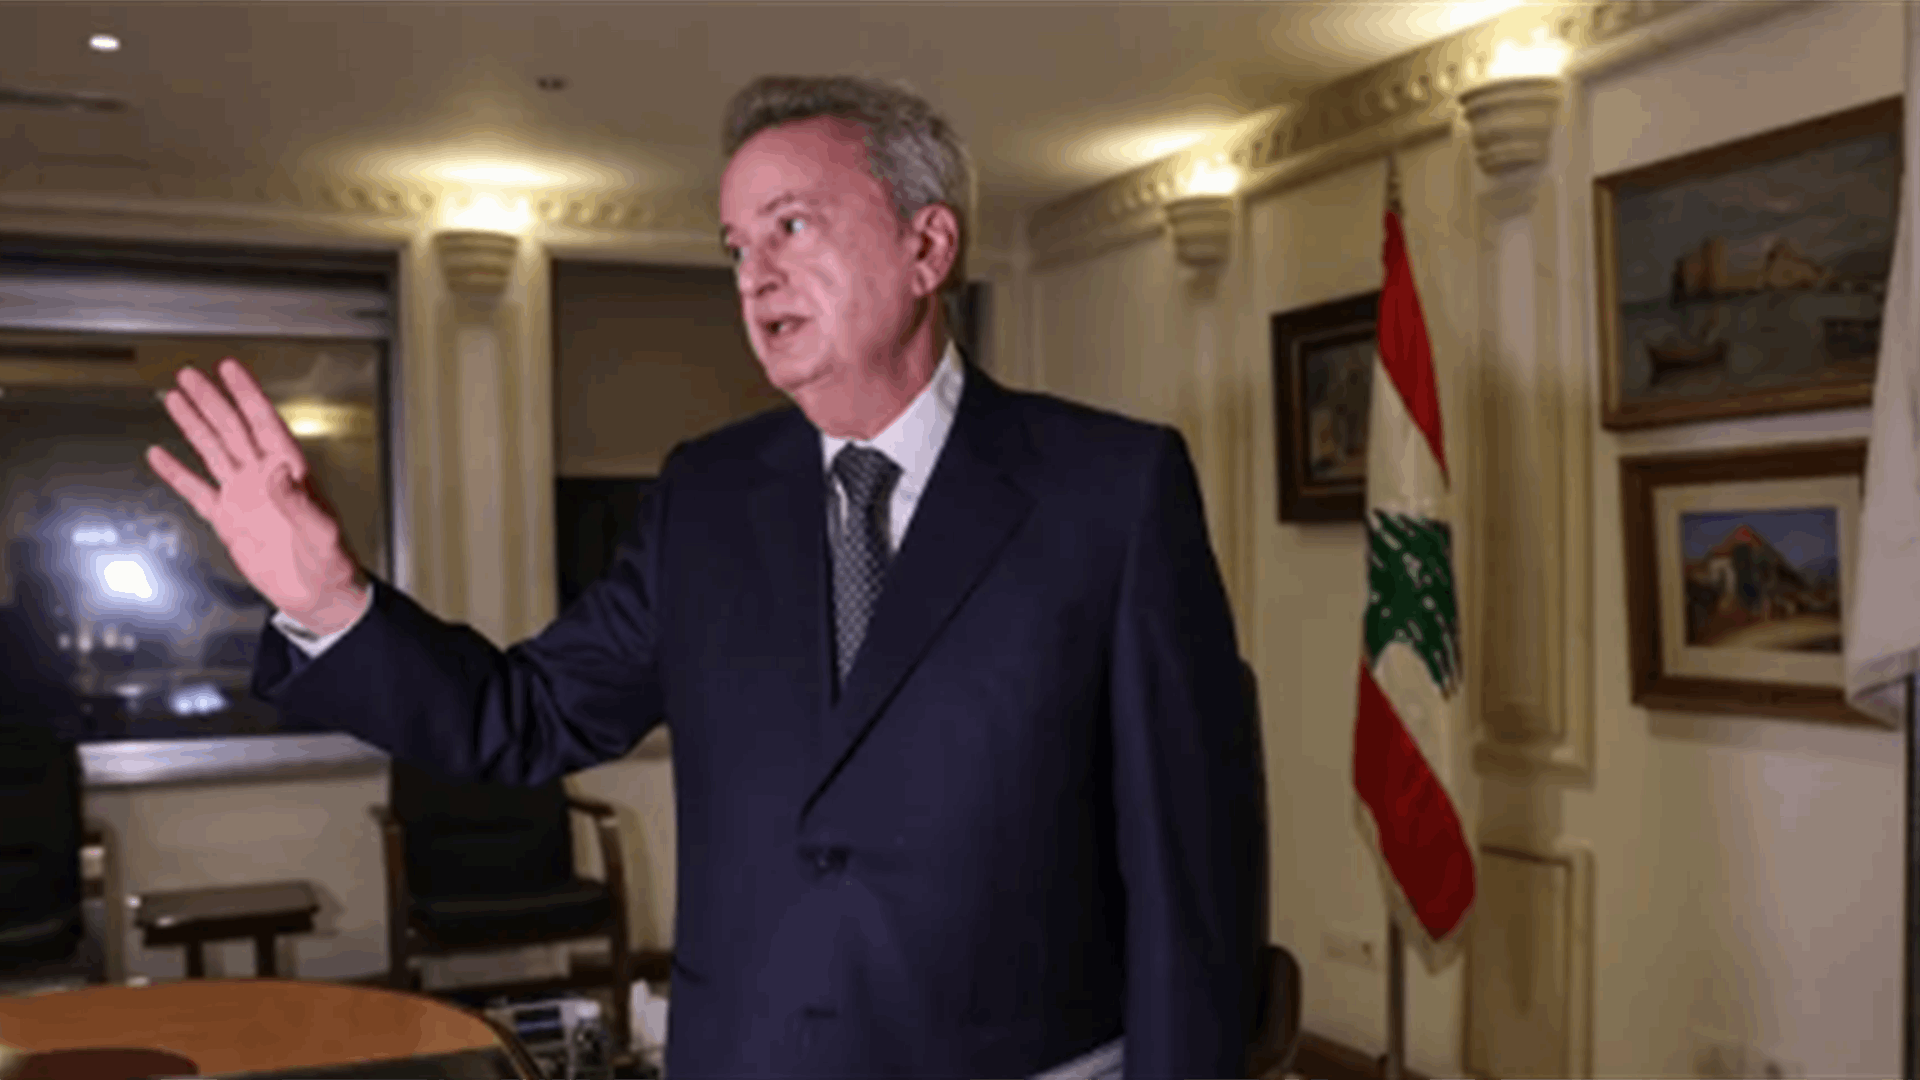  لبنان يطلب من ميونيخ تزويده بملف رياض سلامة القضائي